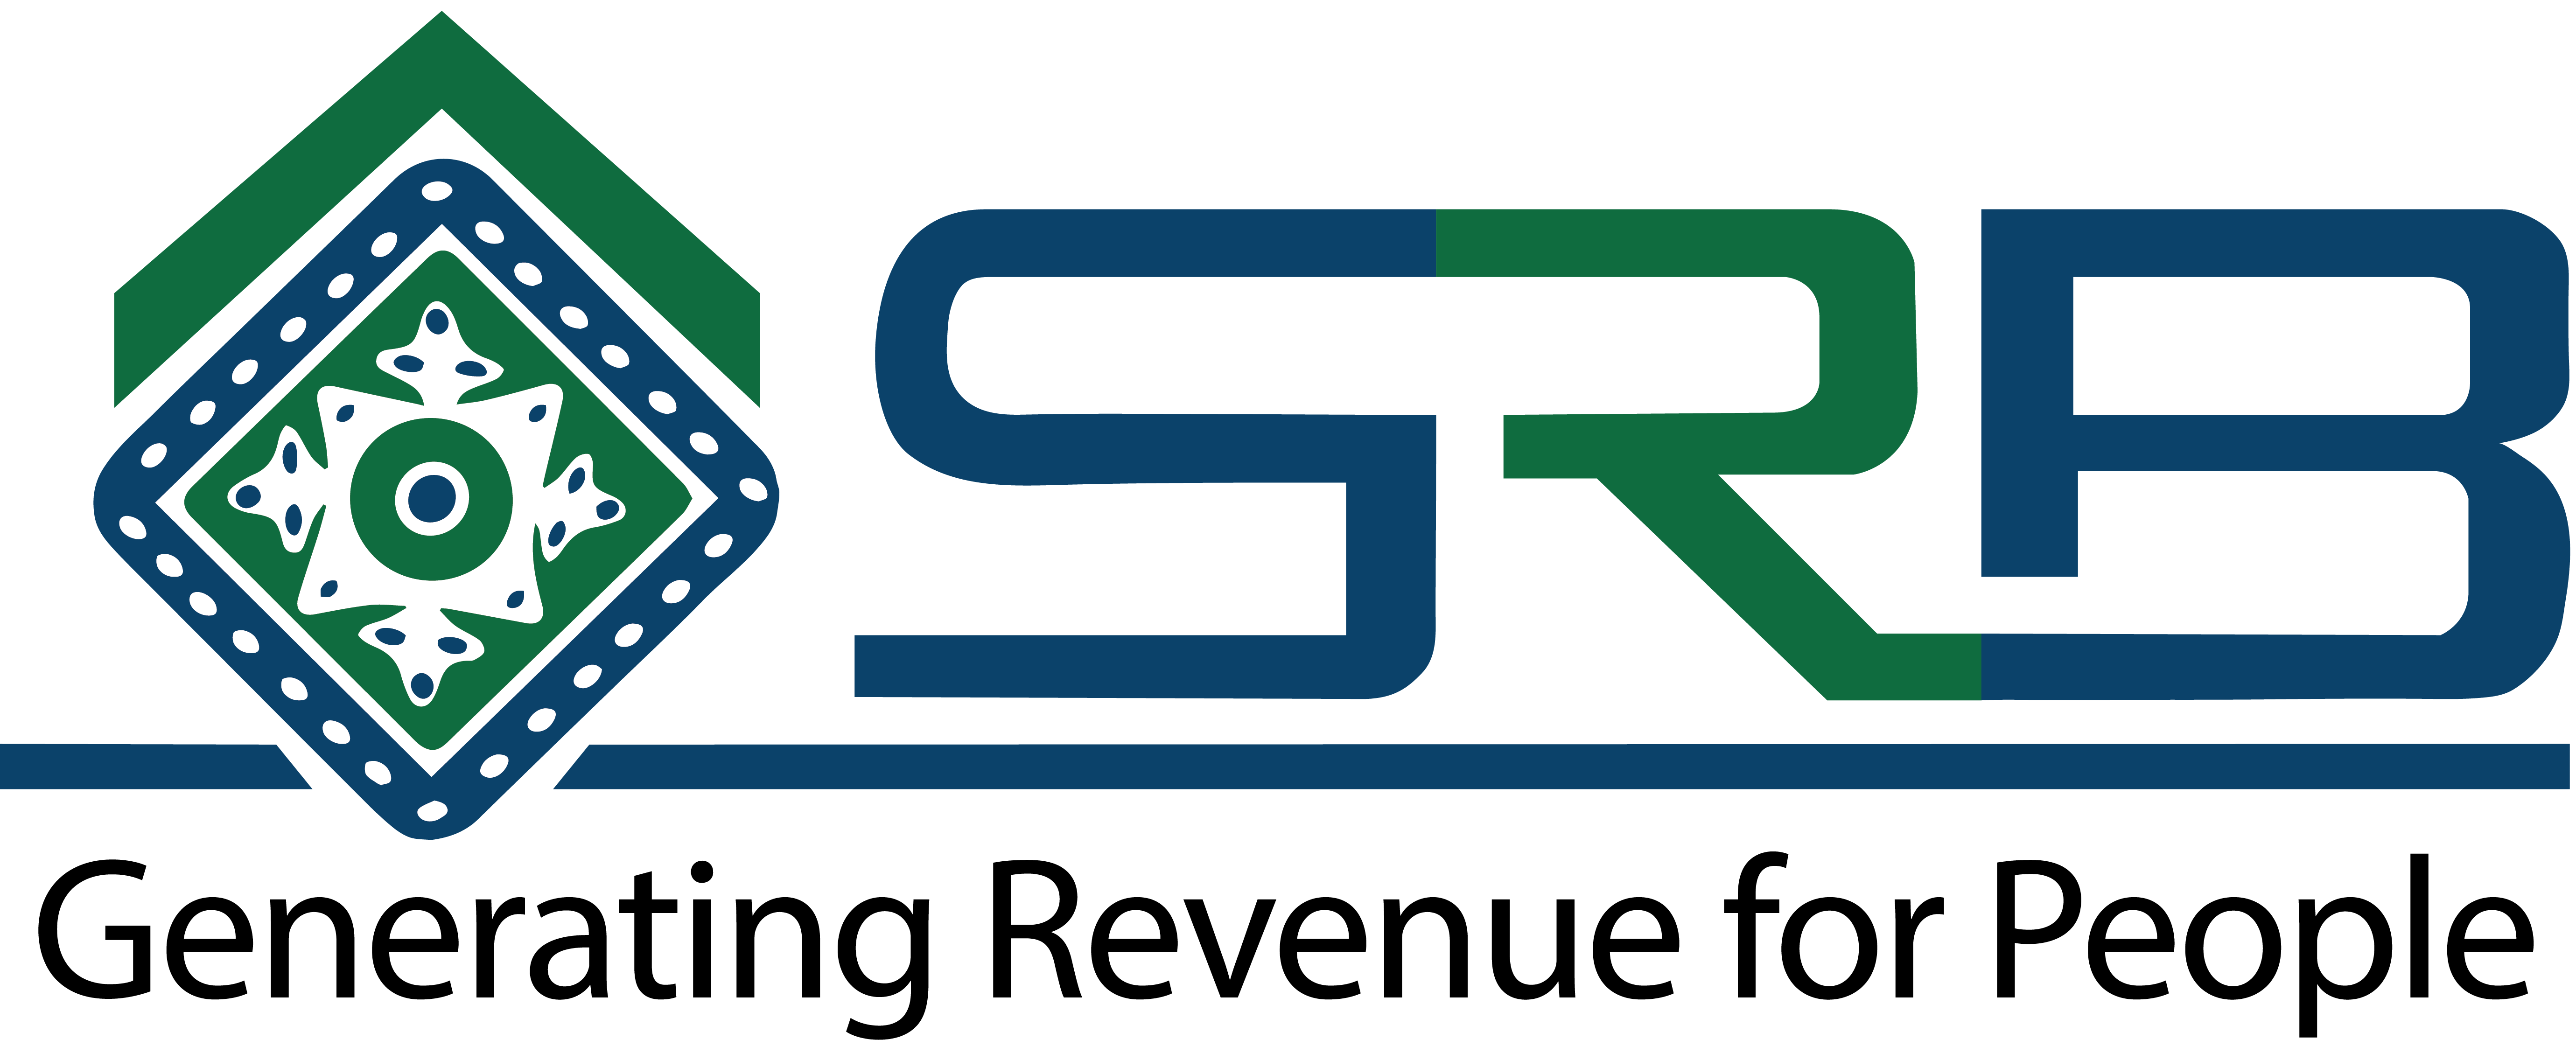 SRB Logo - Careers